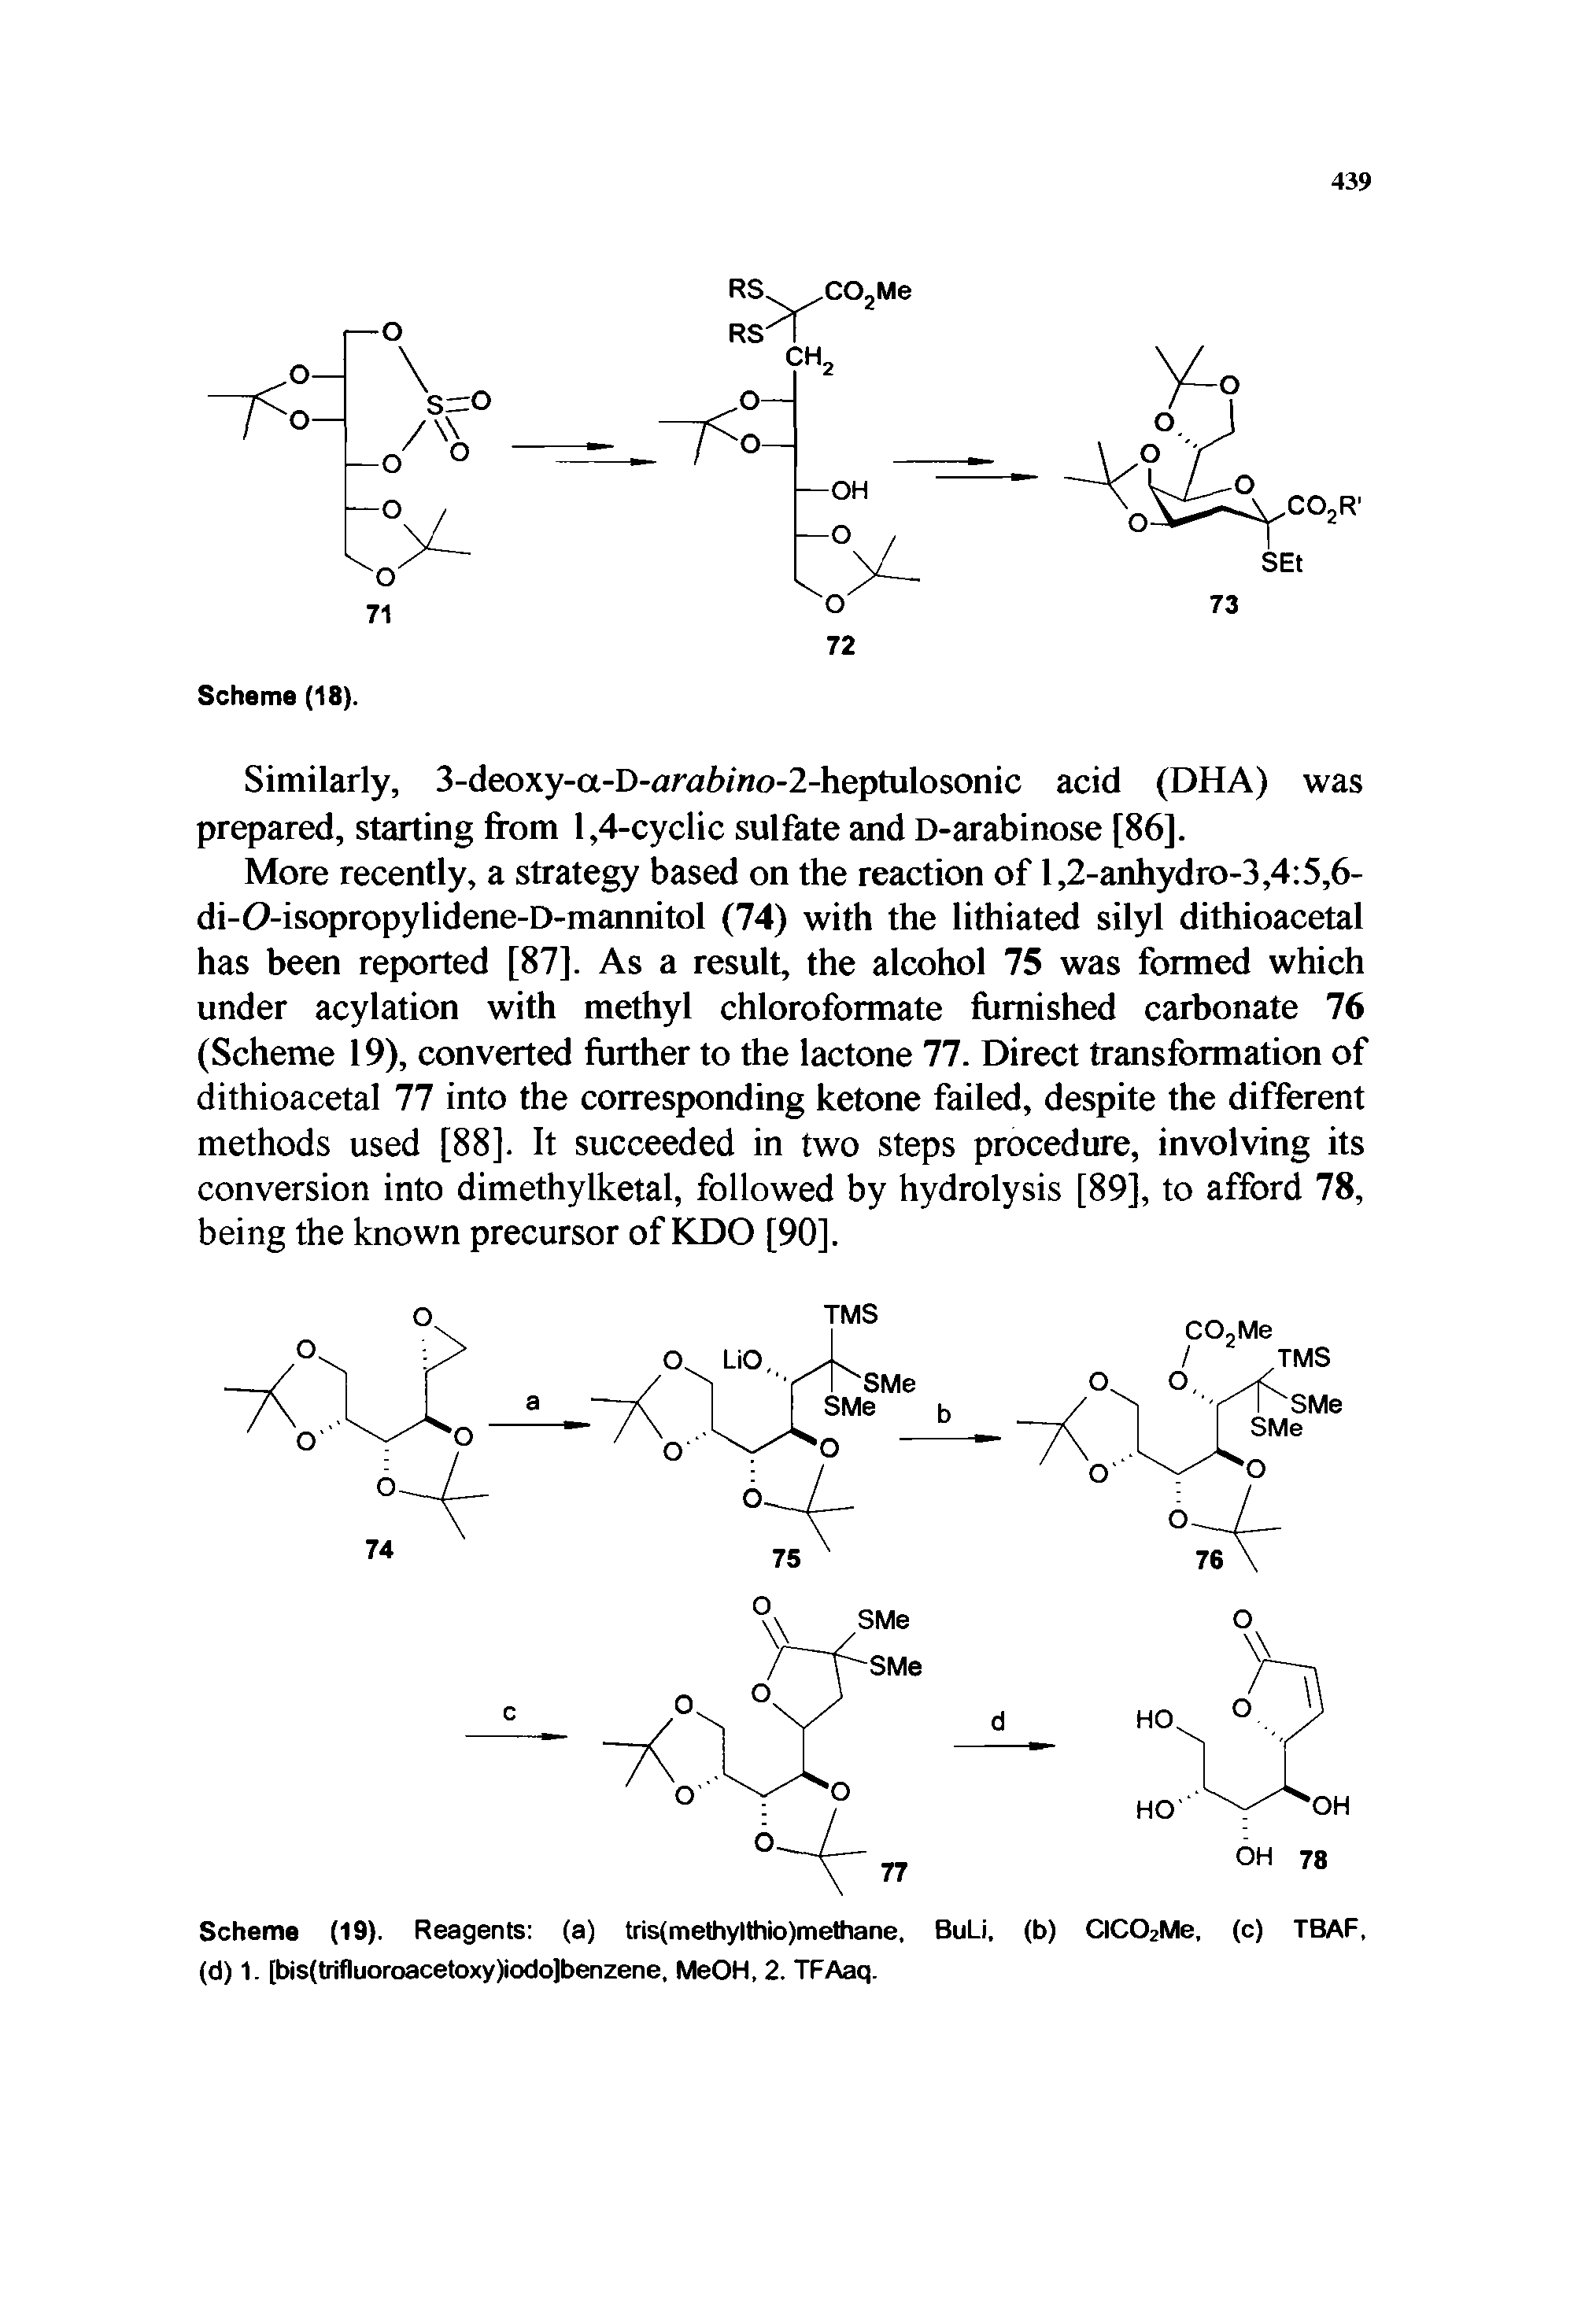 Scheme (19). Reagents (a) tris(methylthio)methane, BuLi, (b) CIC02Me, (c) TBAF,...